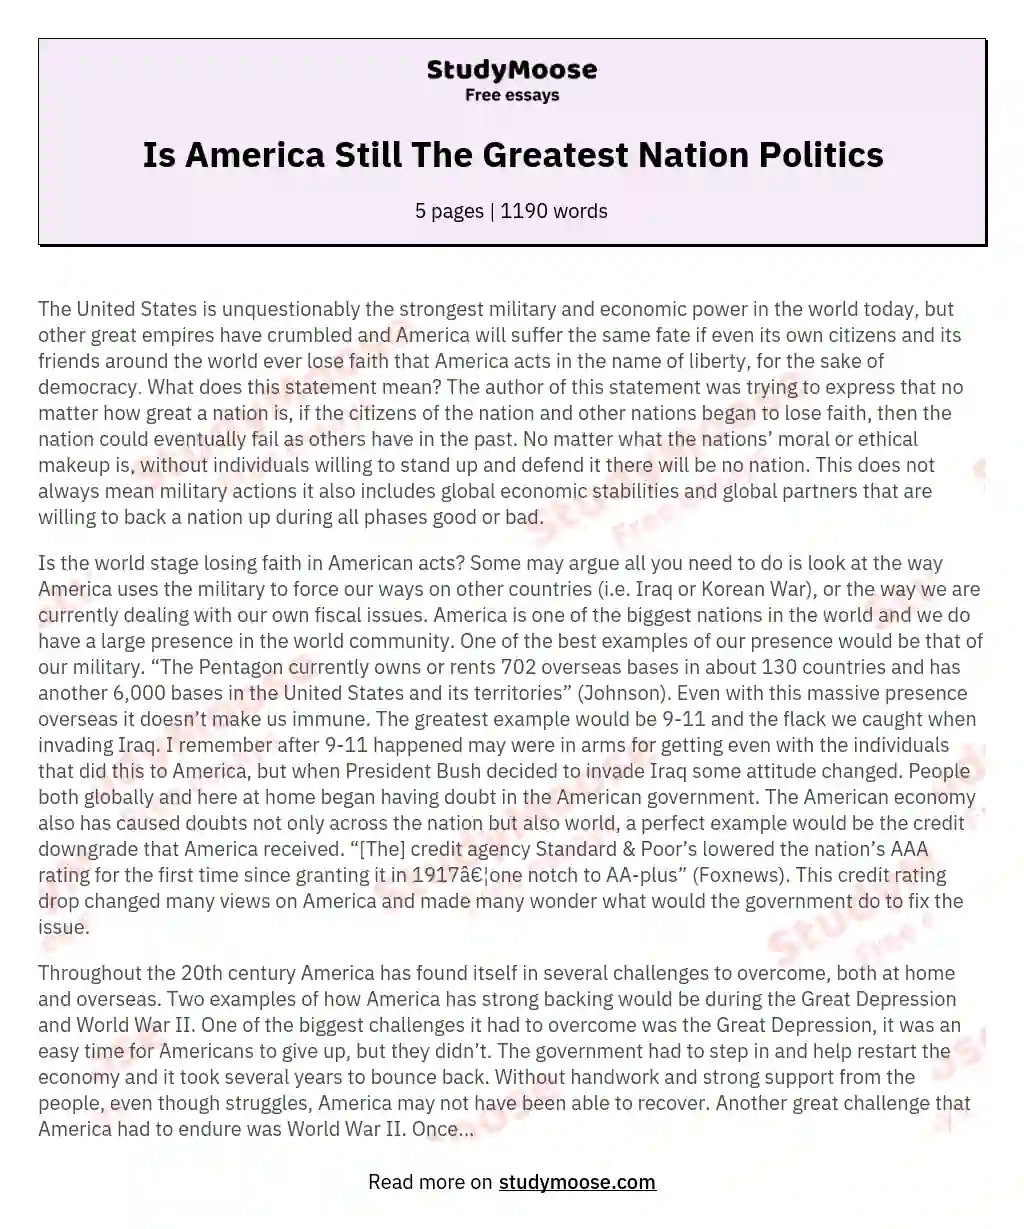 Is America Still The Greatest Nation Politics